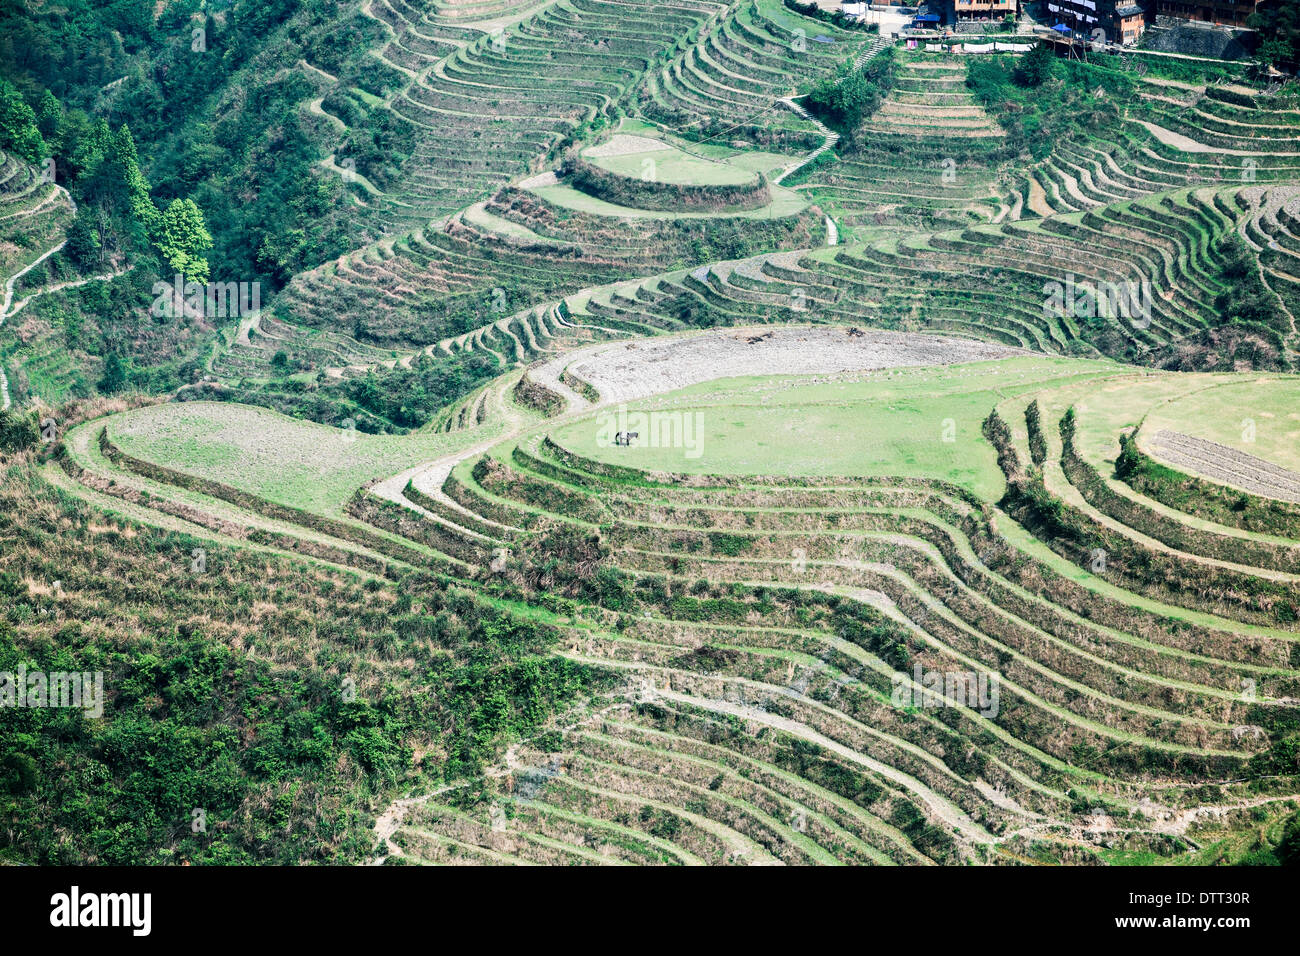 mit Blick auf den terrassenförmig angelegten Feldern Stockfoto